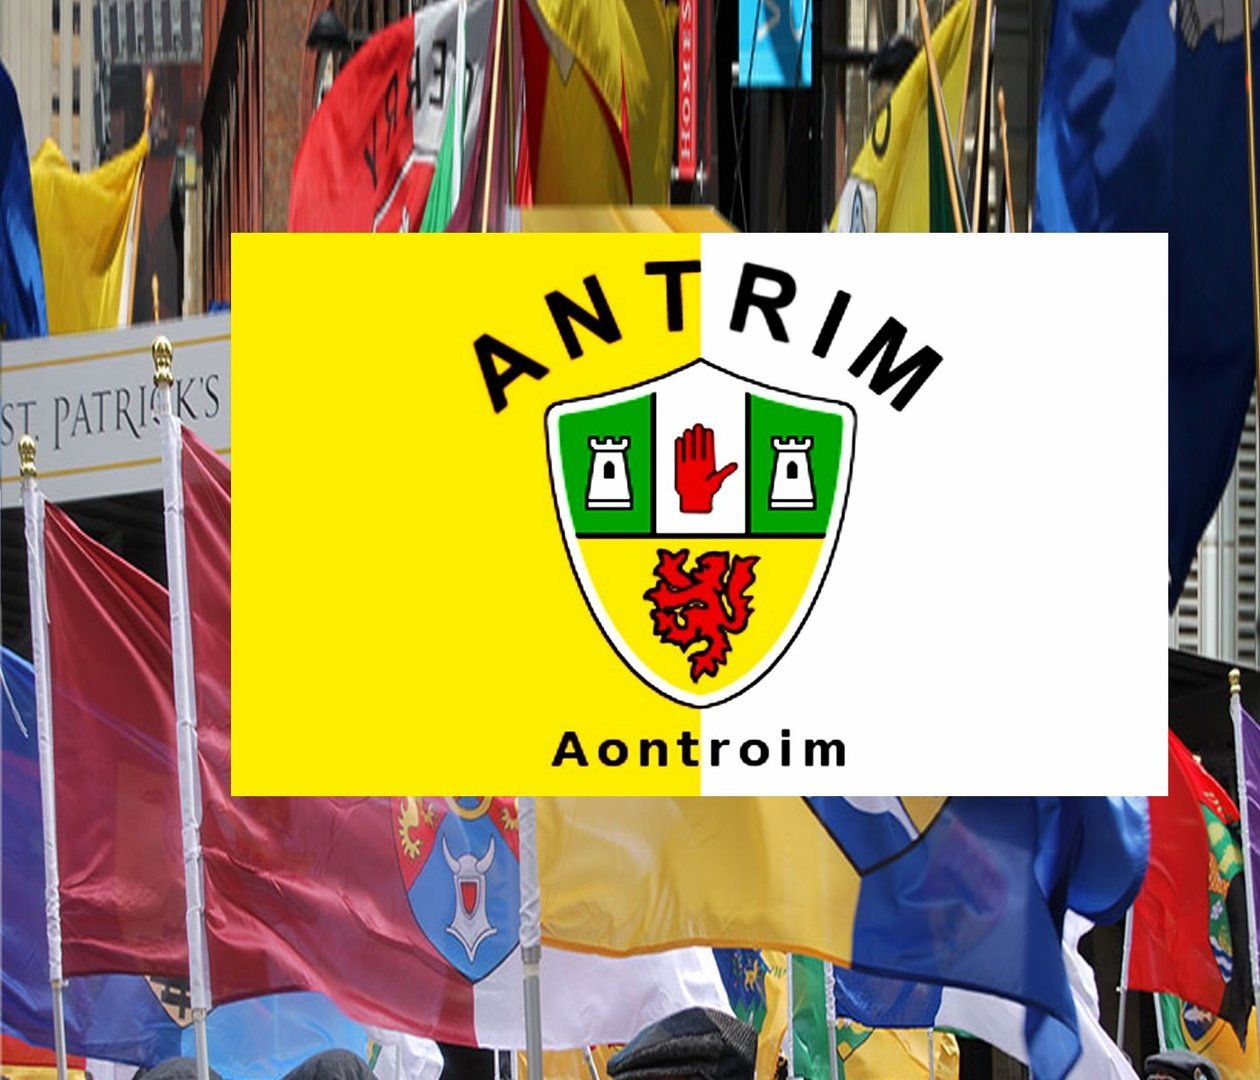 Antrim County Ireland Crest Flag ~ 5 X 3 ft